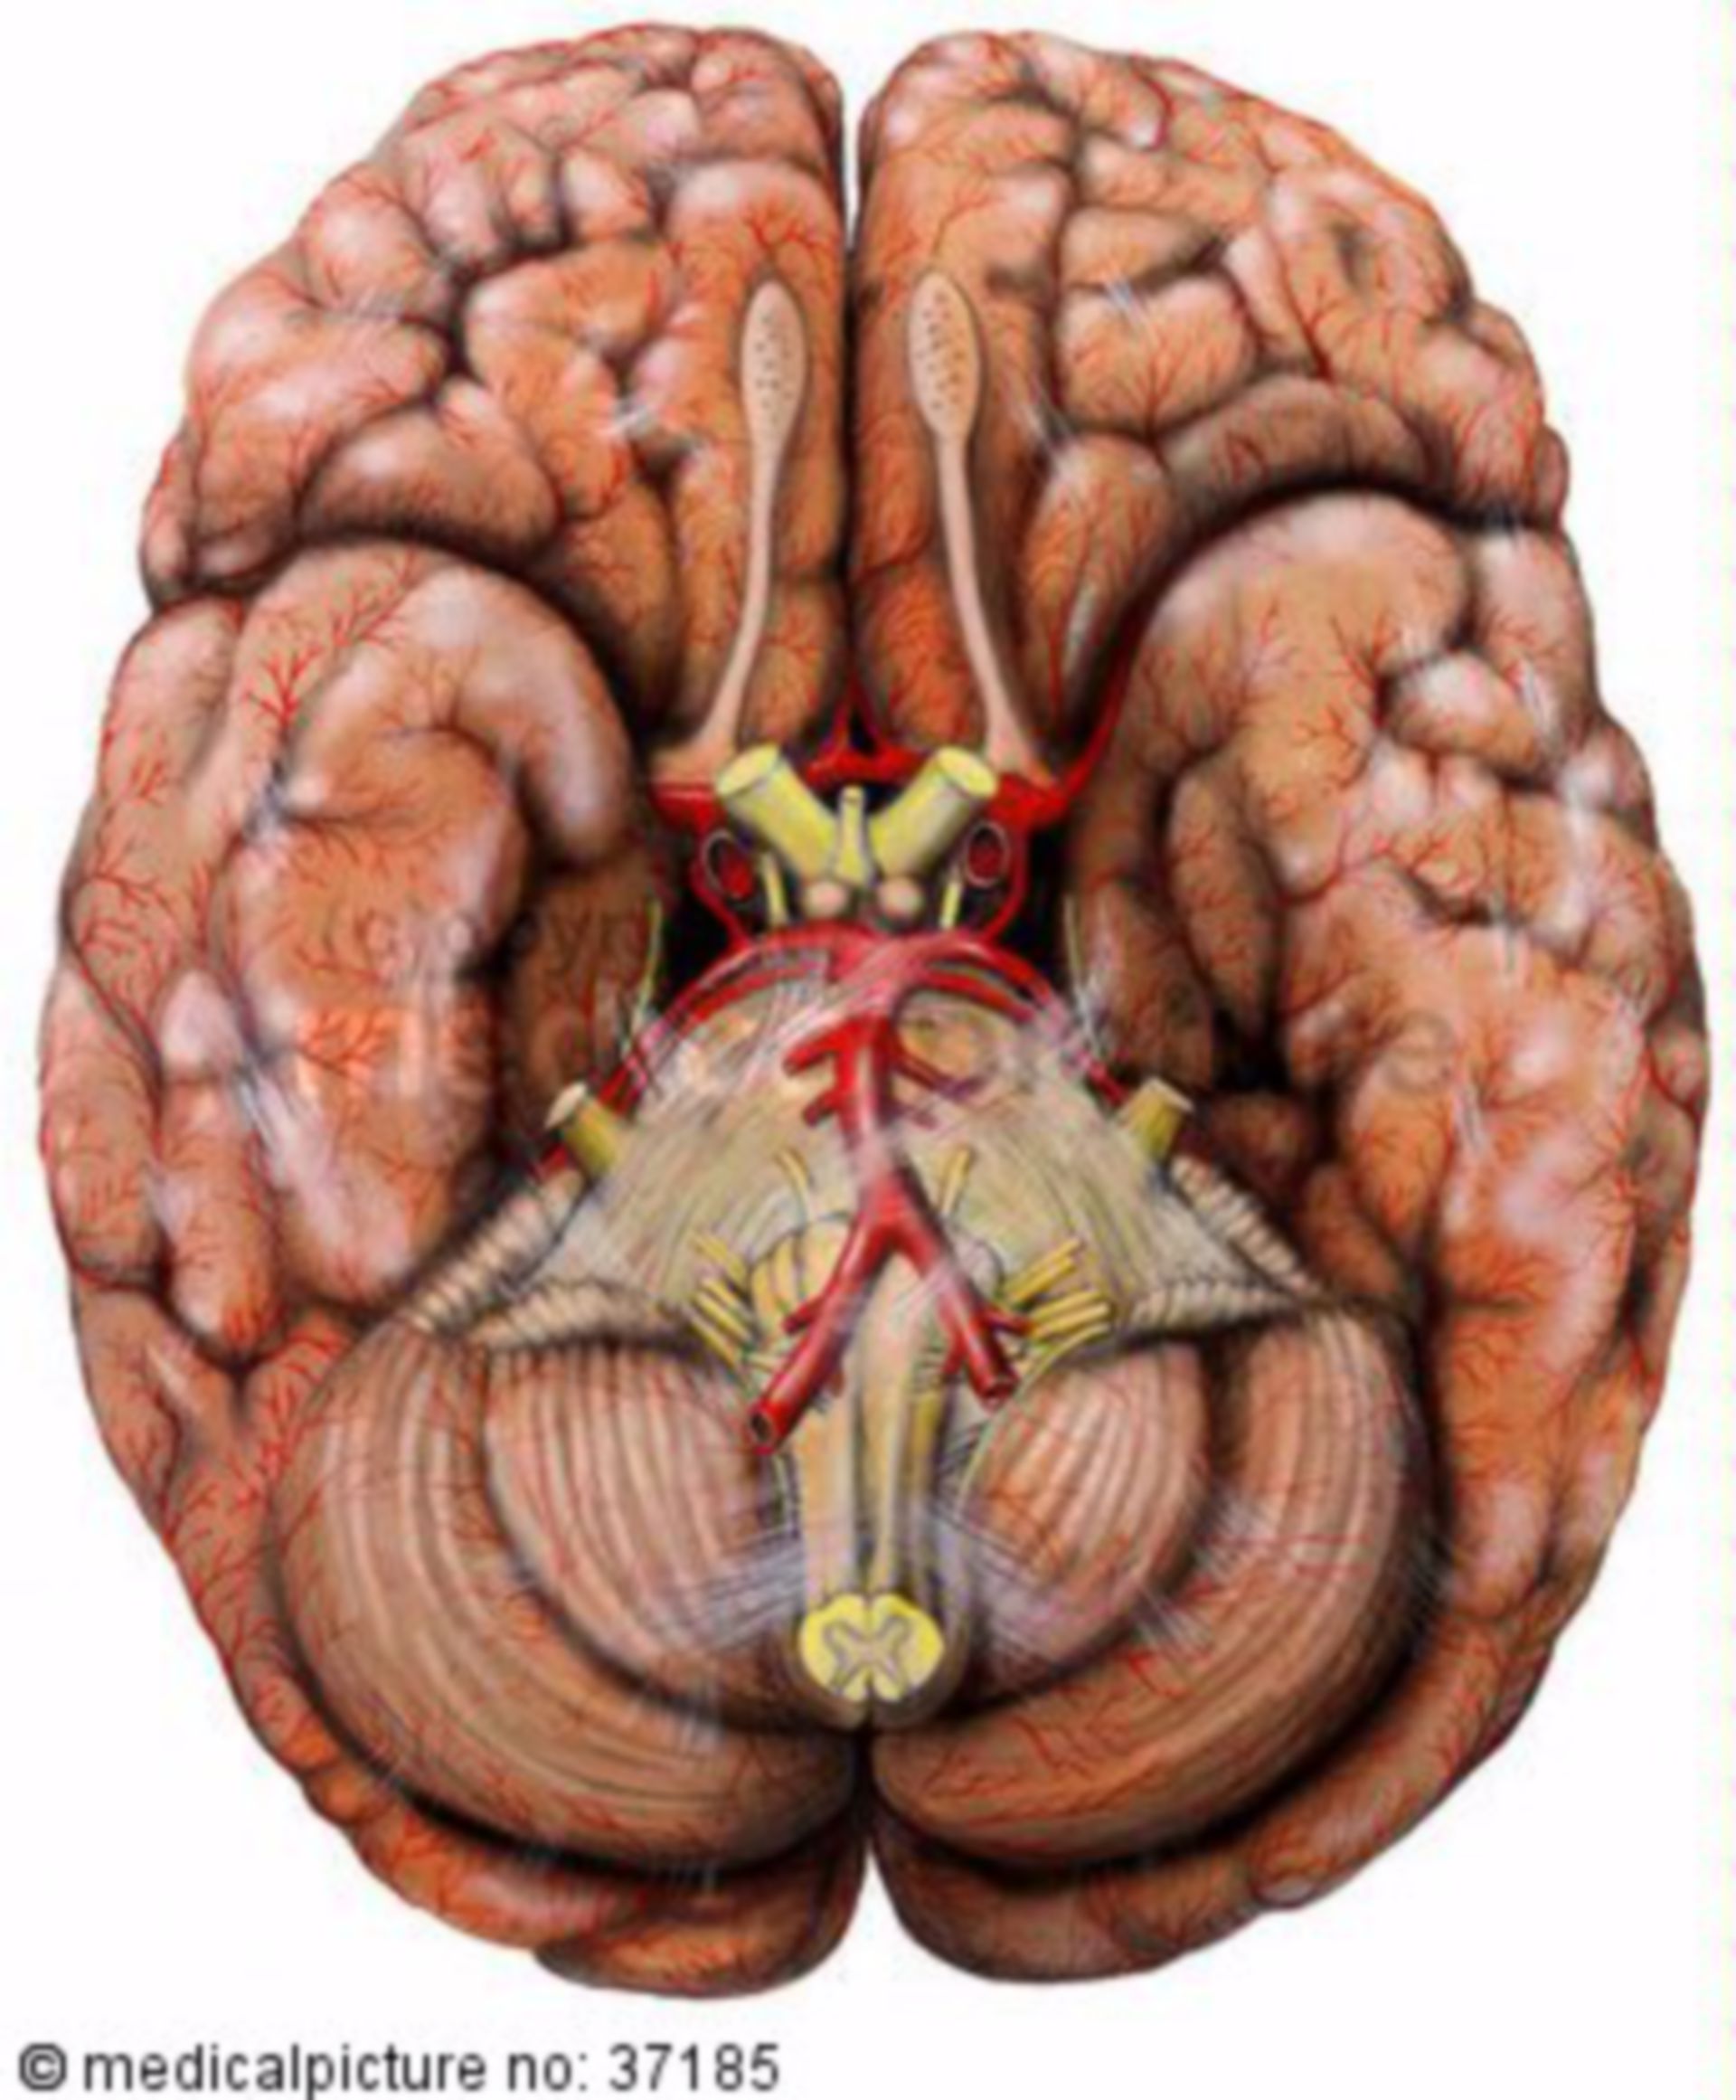  Basalfläche des Gehirns 
